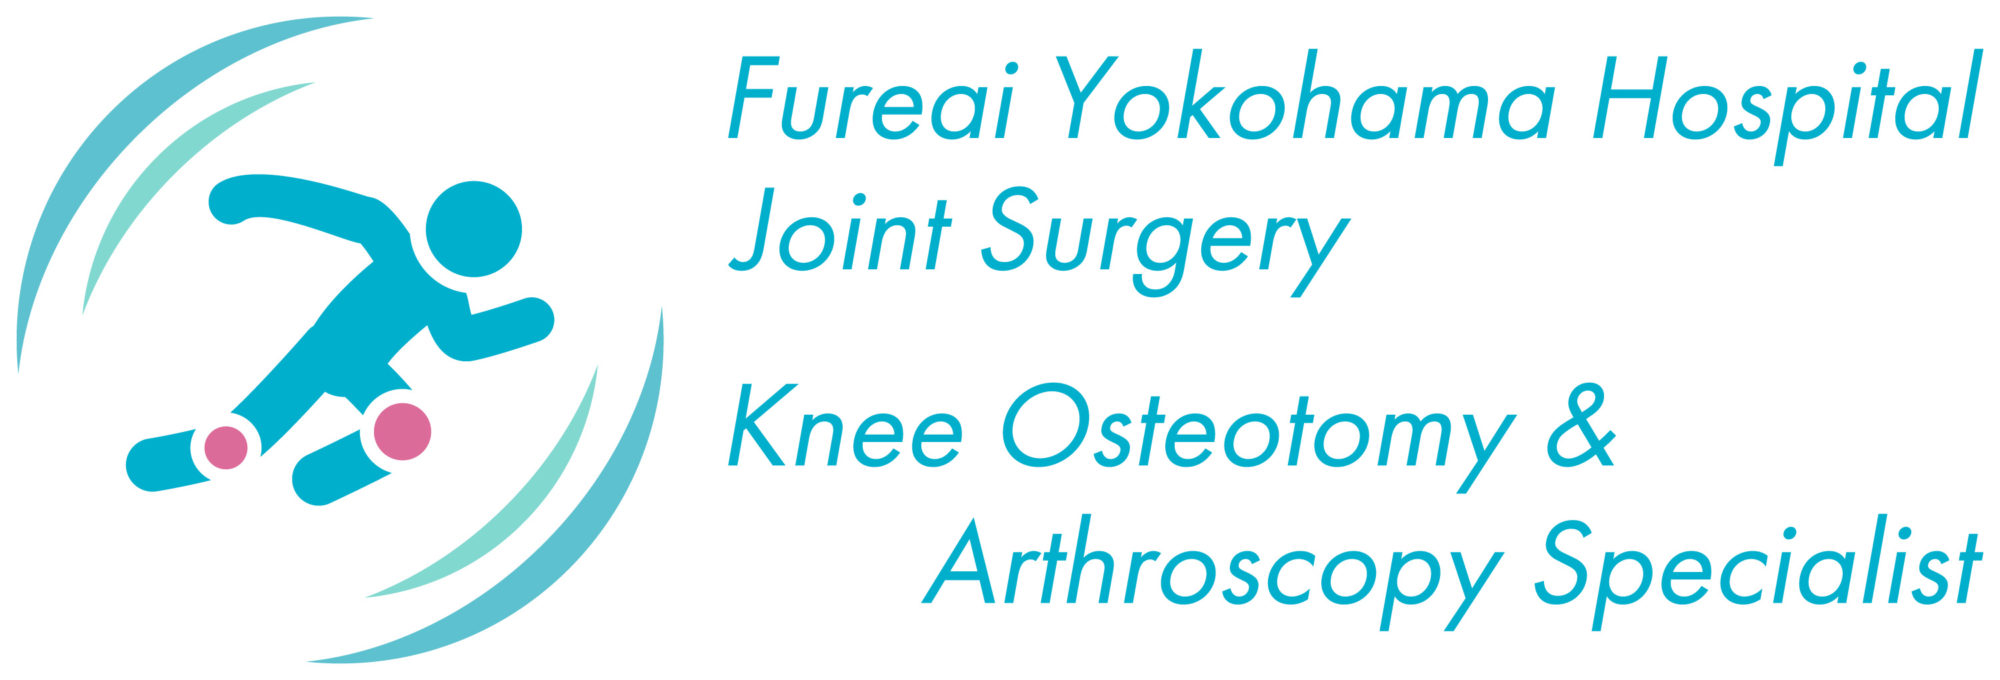 Fureai-Yokohama-Hospital-Joint-Surgery様_logo-yoko